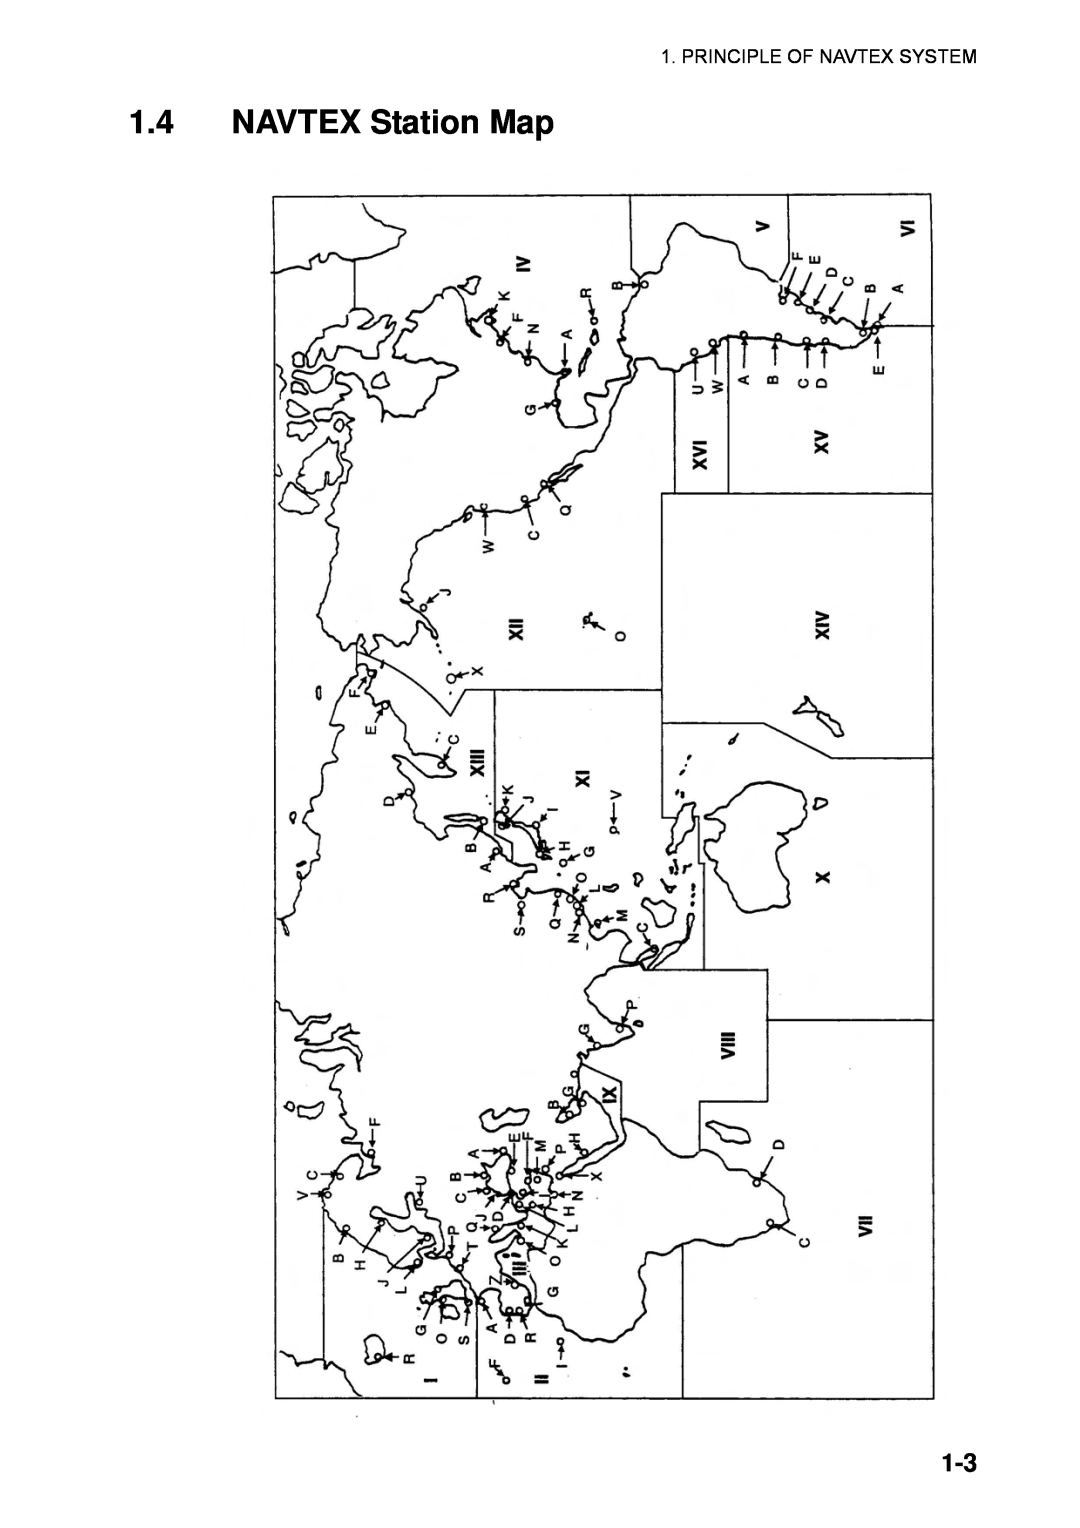 Furuno NX-700B manual 1.4NAVTEX Station Map, Principle Of Navtex System 